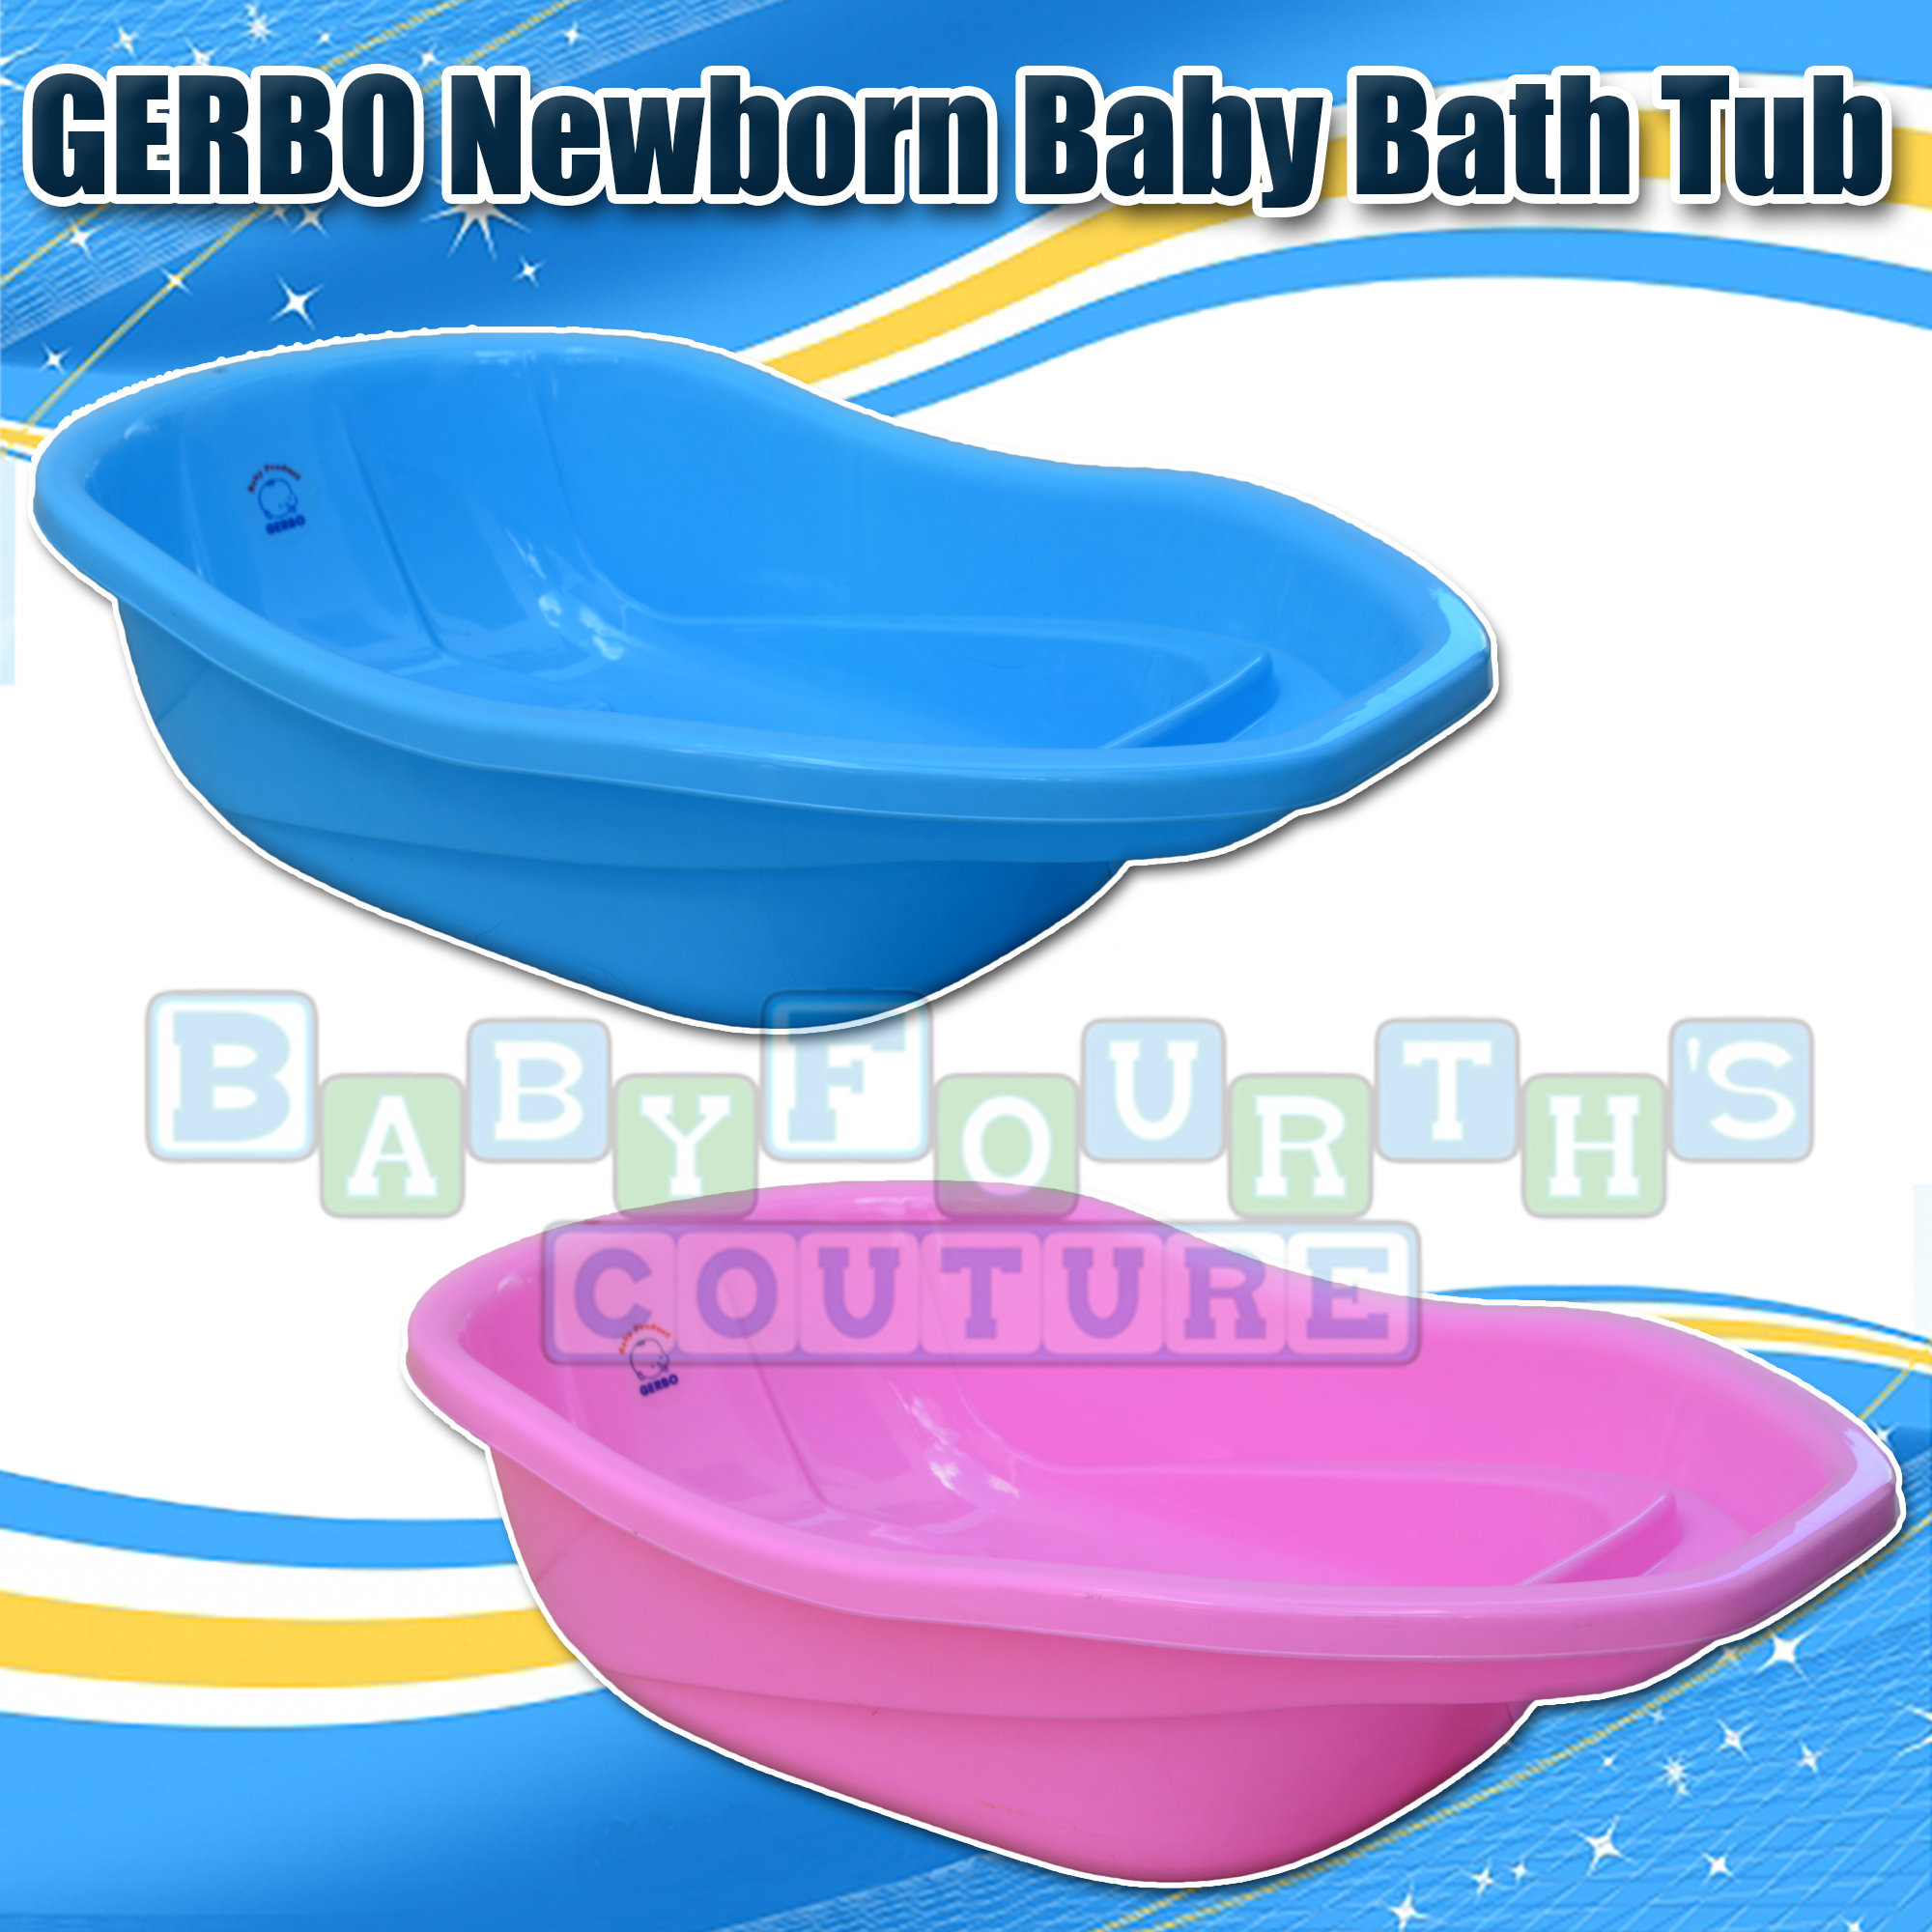 how to bathe an infant in a baby bath tub